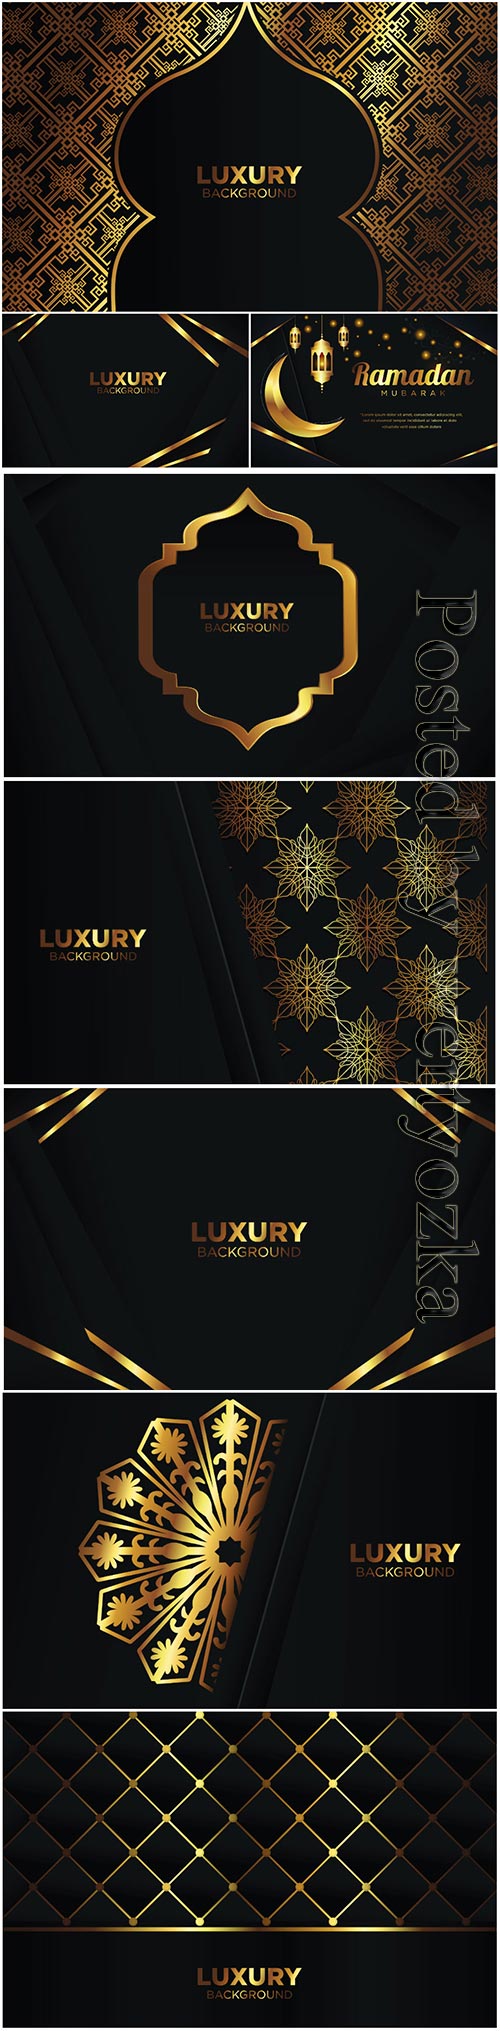 Luxury vector background ramadan islamic arabesque